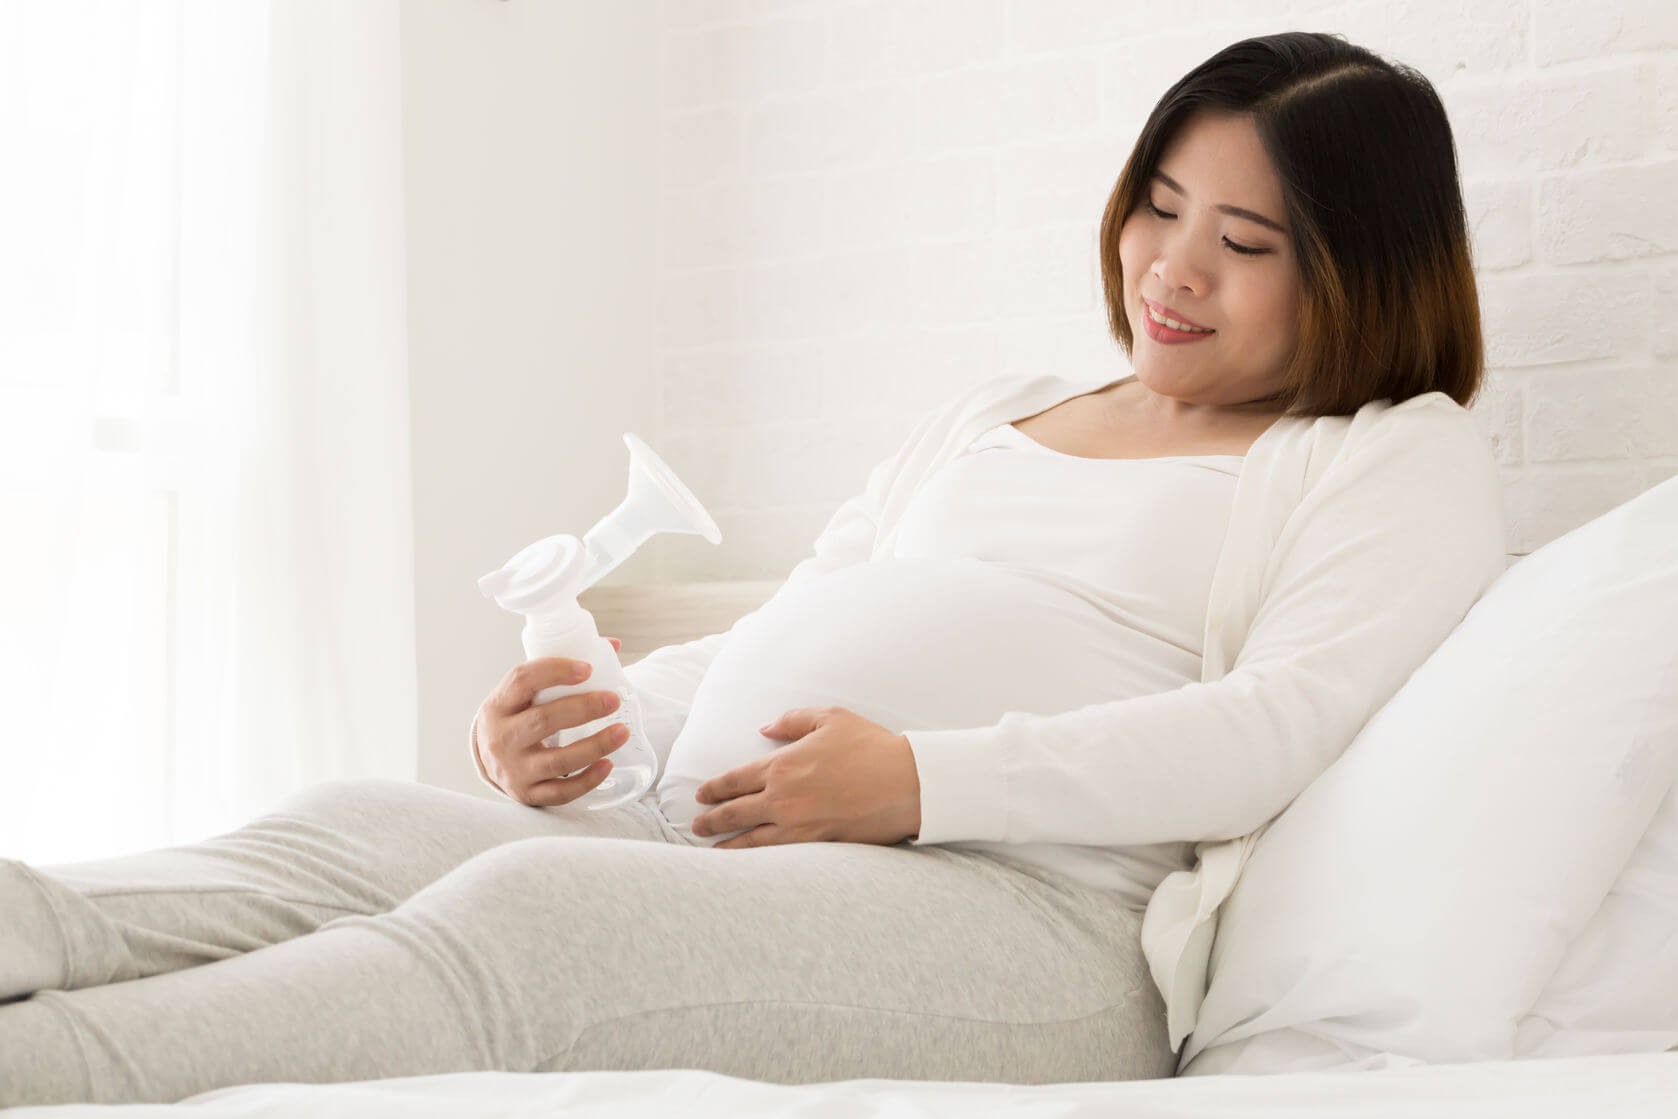 Ways to resolve seepage Breast Milk during 7 months pregnancy